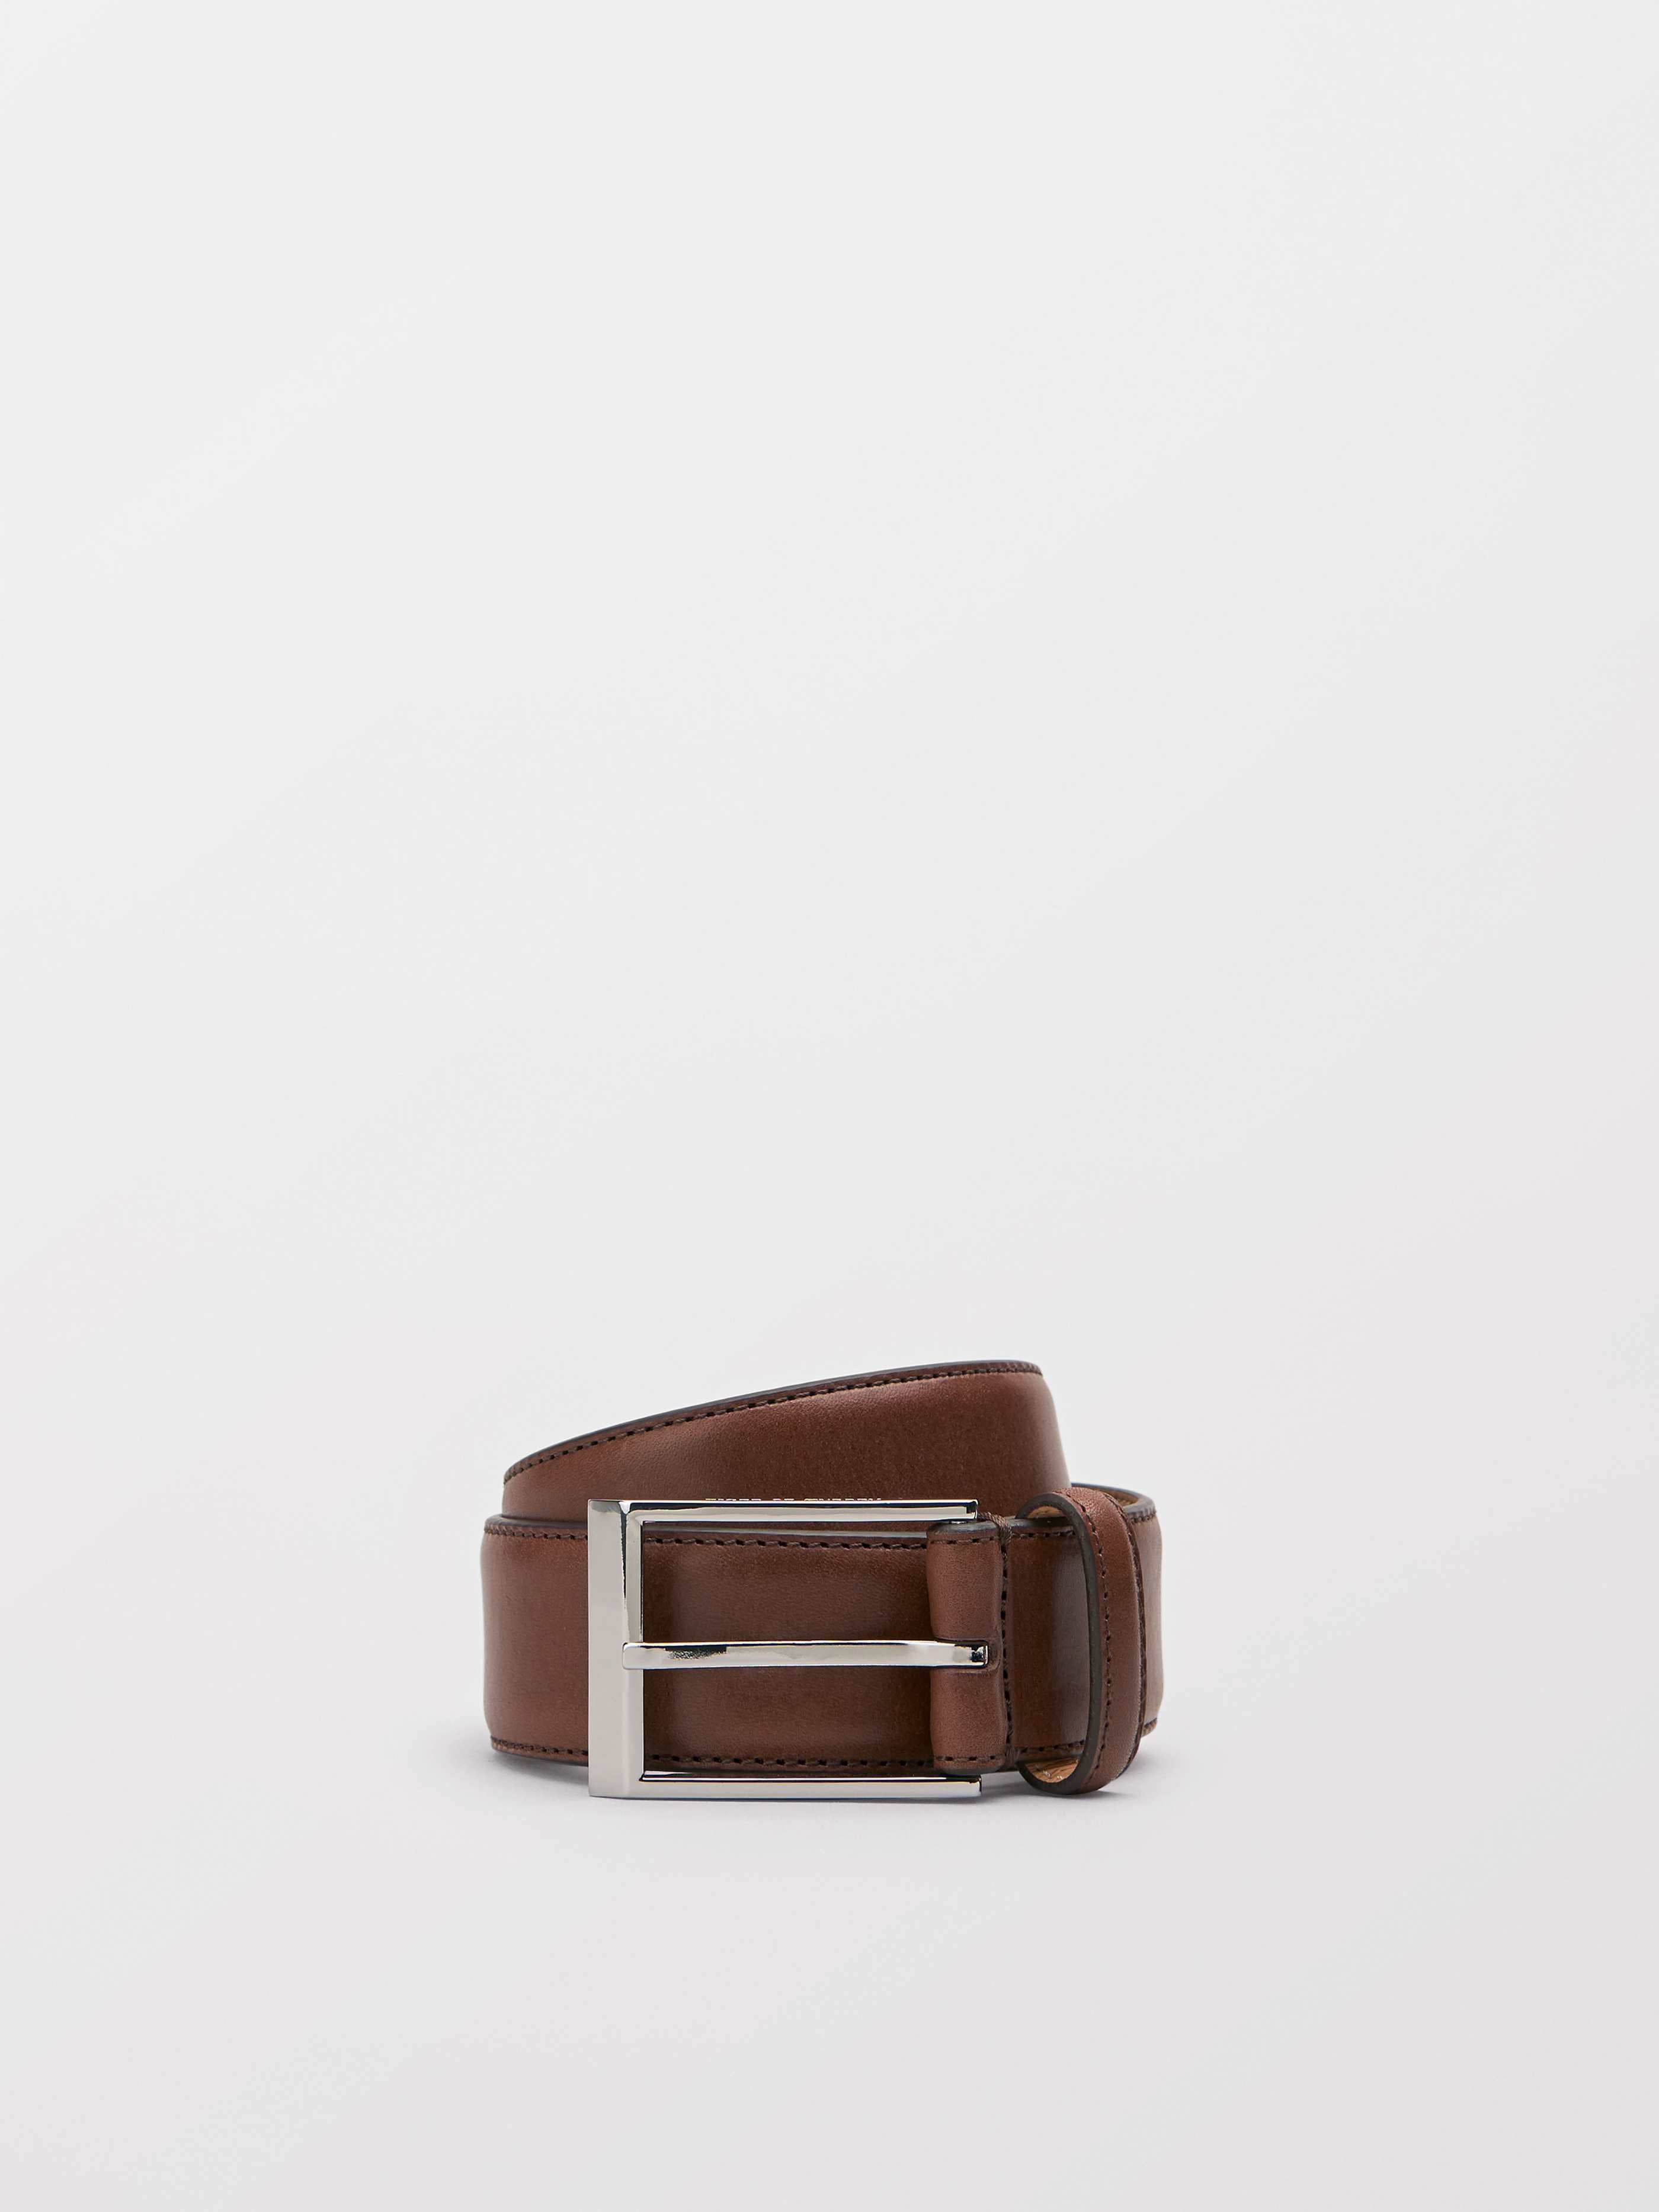 TIGER OF SWEDEN Helmi Leather Belt in Brown U49055040Z 10N-DARK BROWN FROM EIGHTYWINGOLD - OFFICIAL BRAND PARTNER